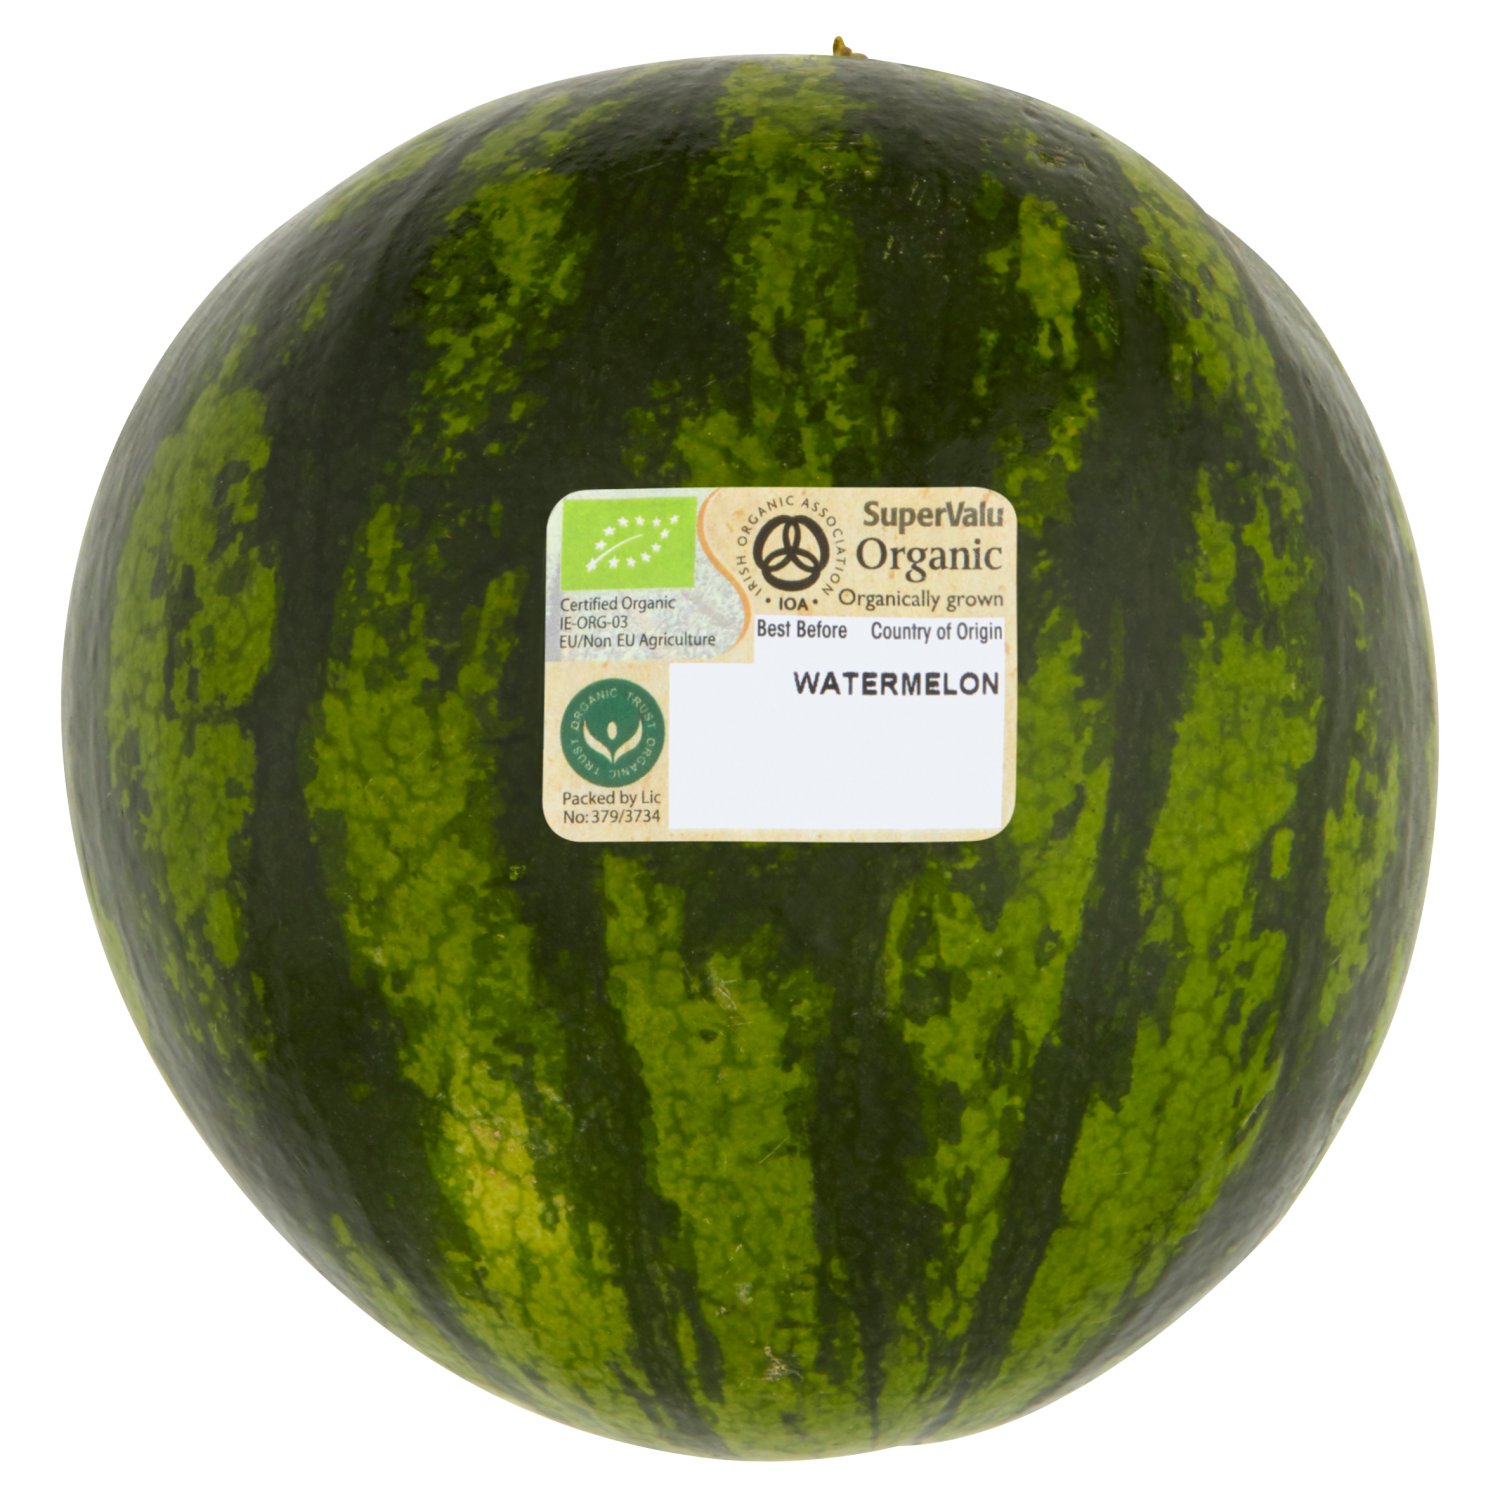 SuperValu Organic Watermelon (1 Piece)